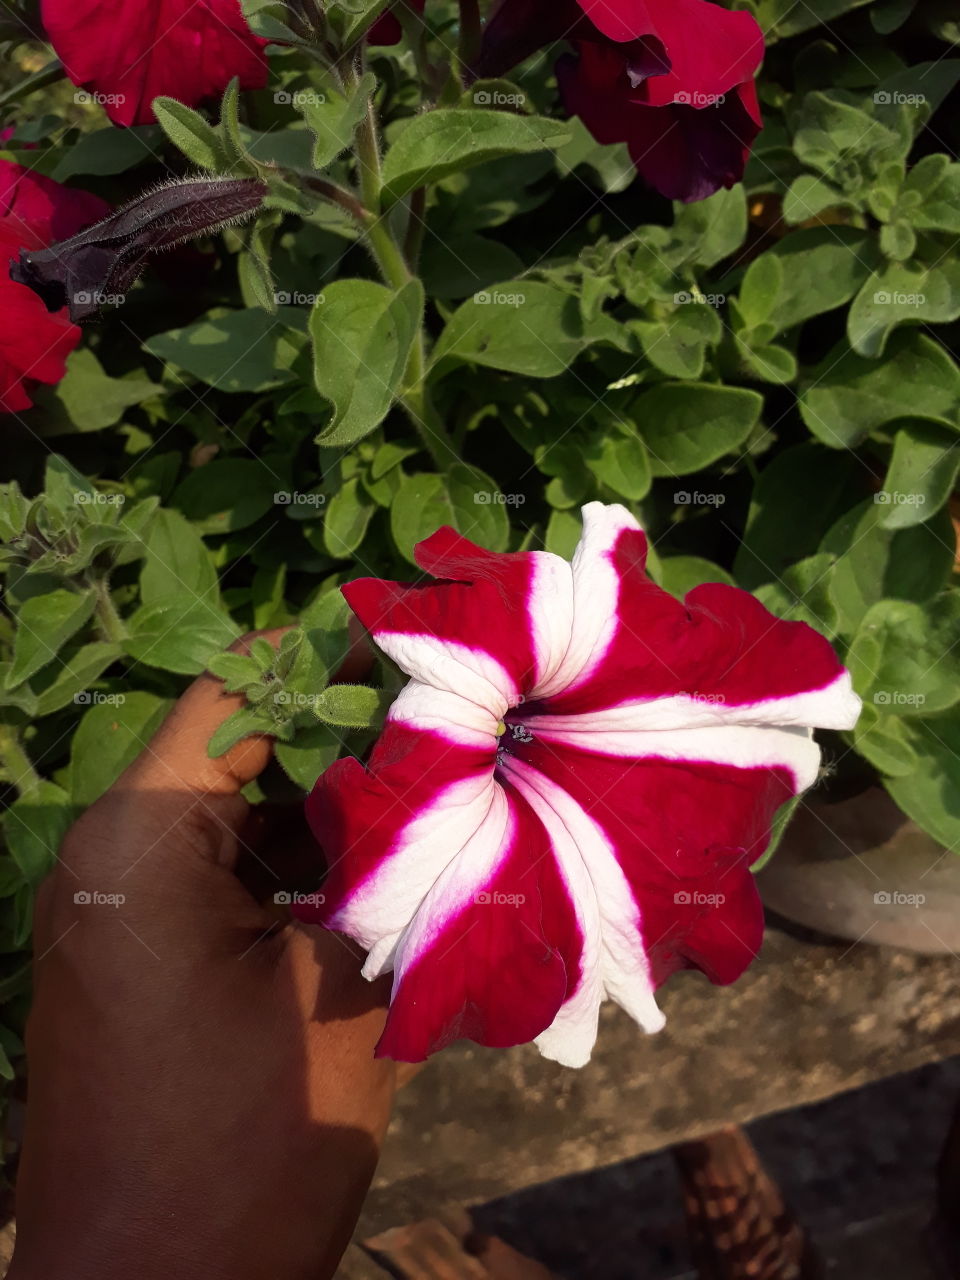 flower captured in garden with Samsung j7 prime in Huge sun ray